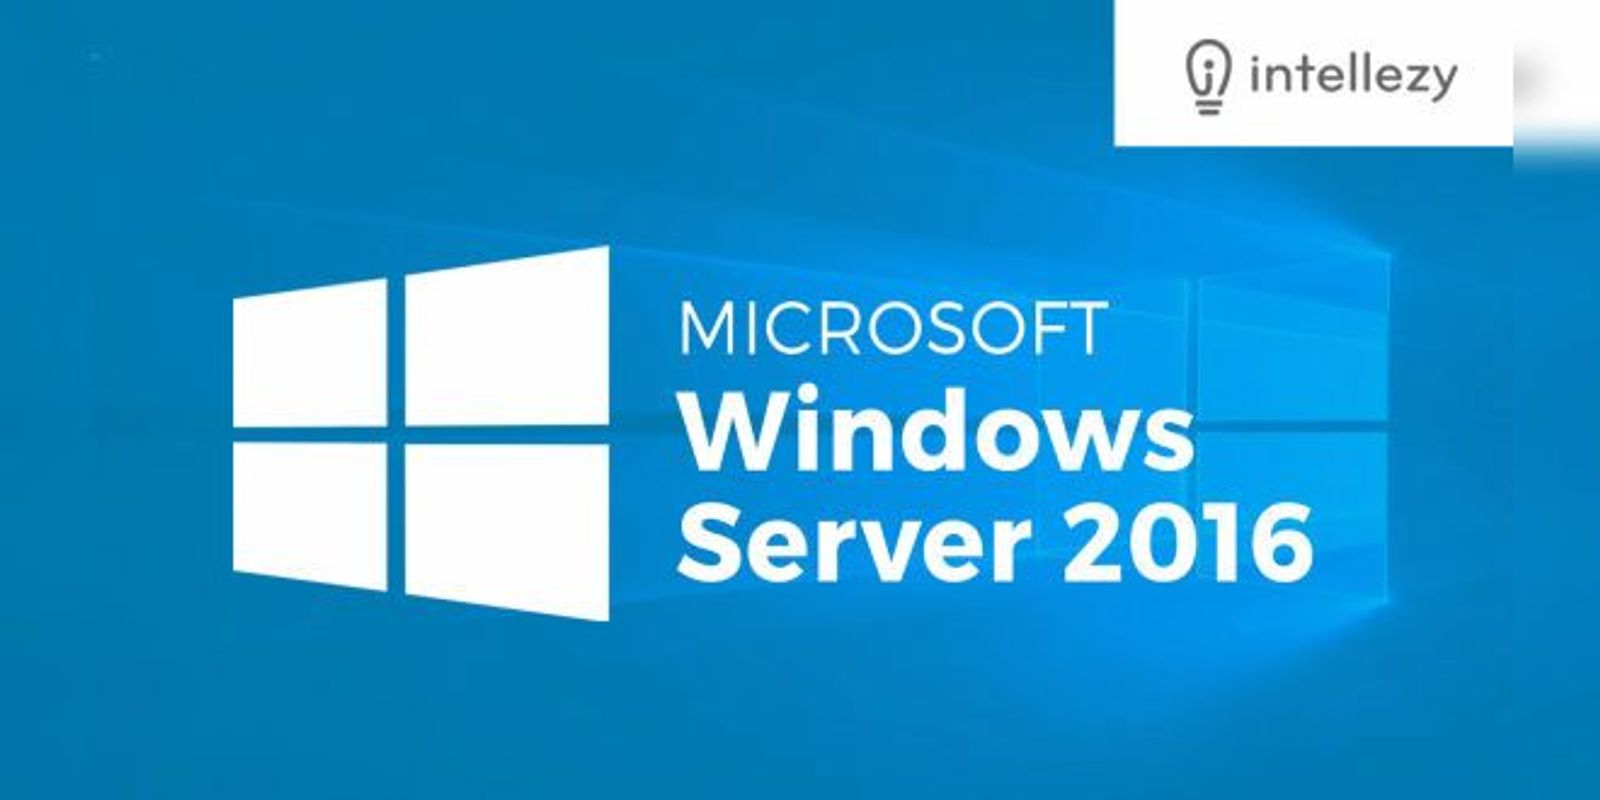 Installation, Storage And Compute Windows Server 2016